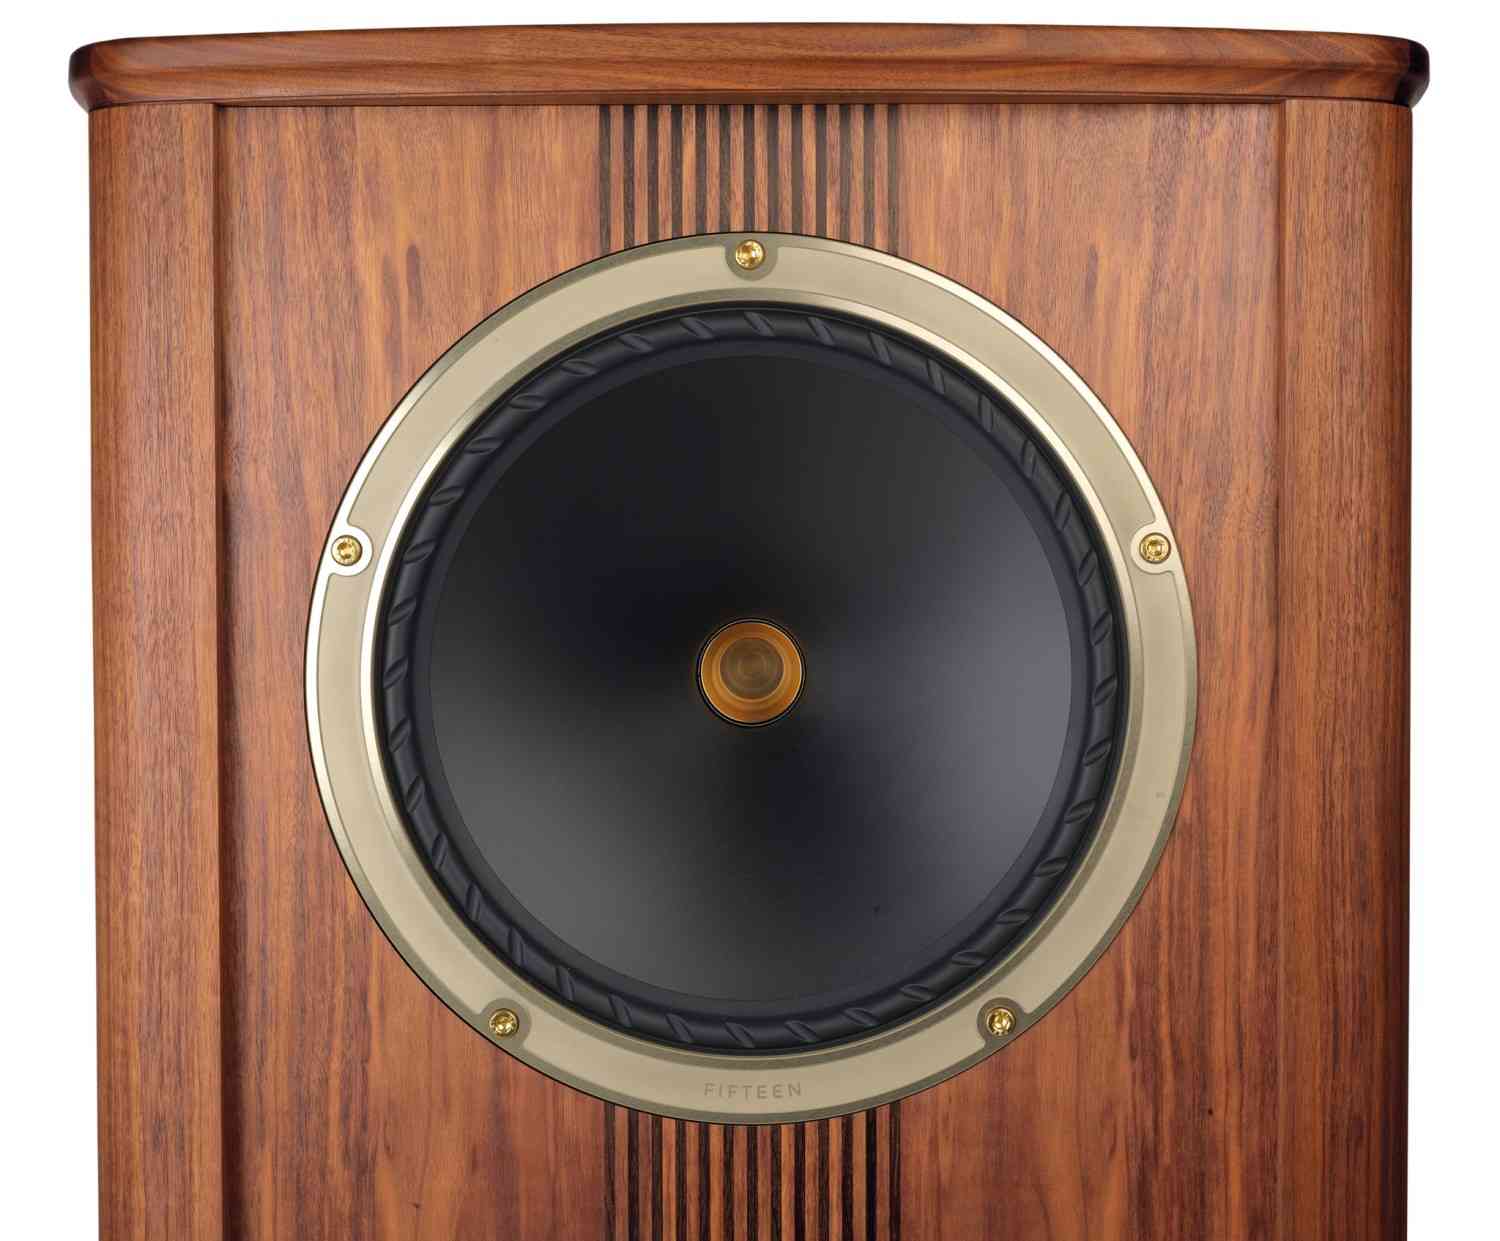 Lautsprecher Stereo Fyne Audio Vintage Fifteen im Test, Bild 10